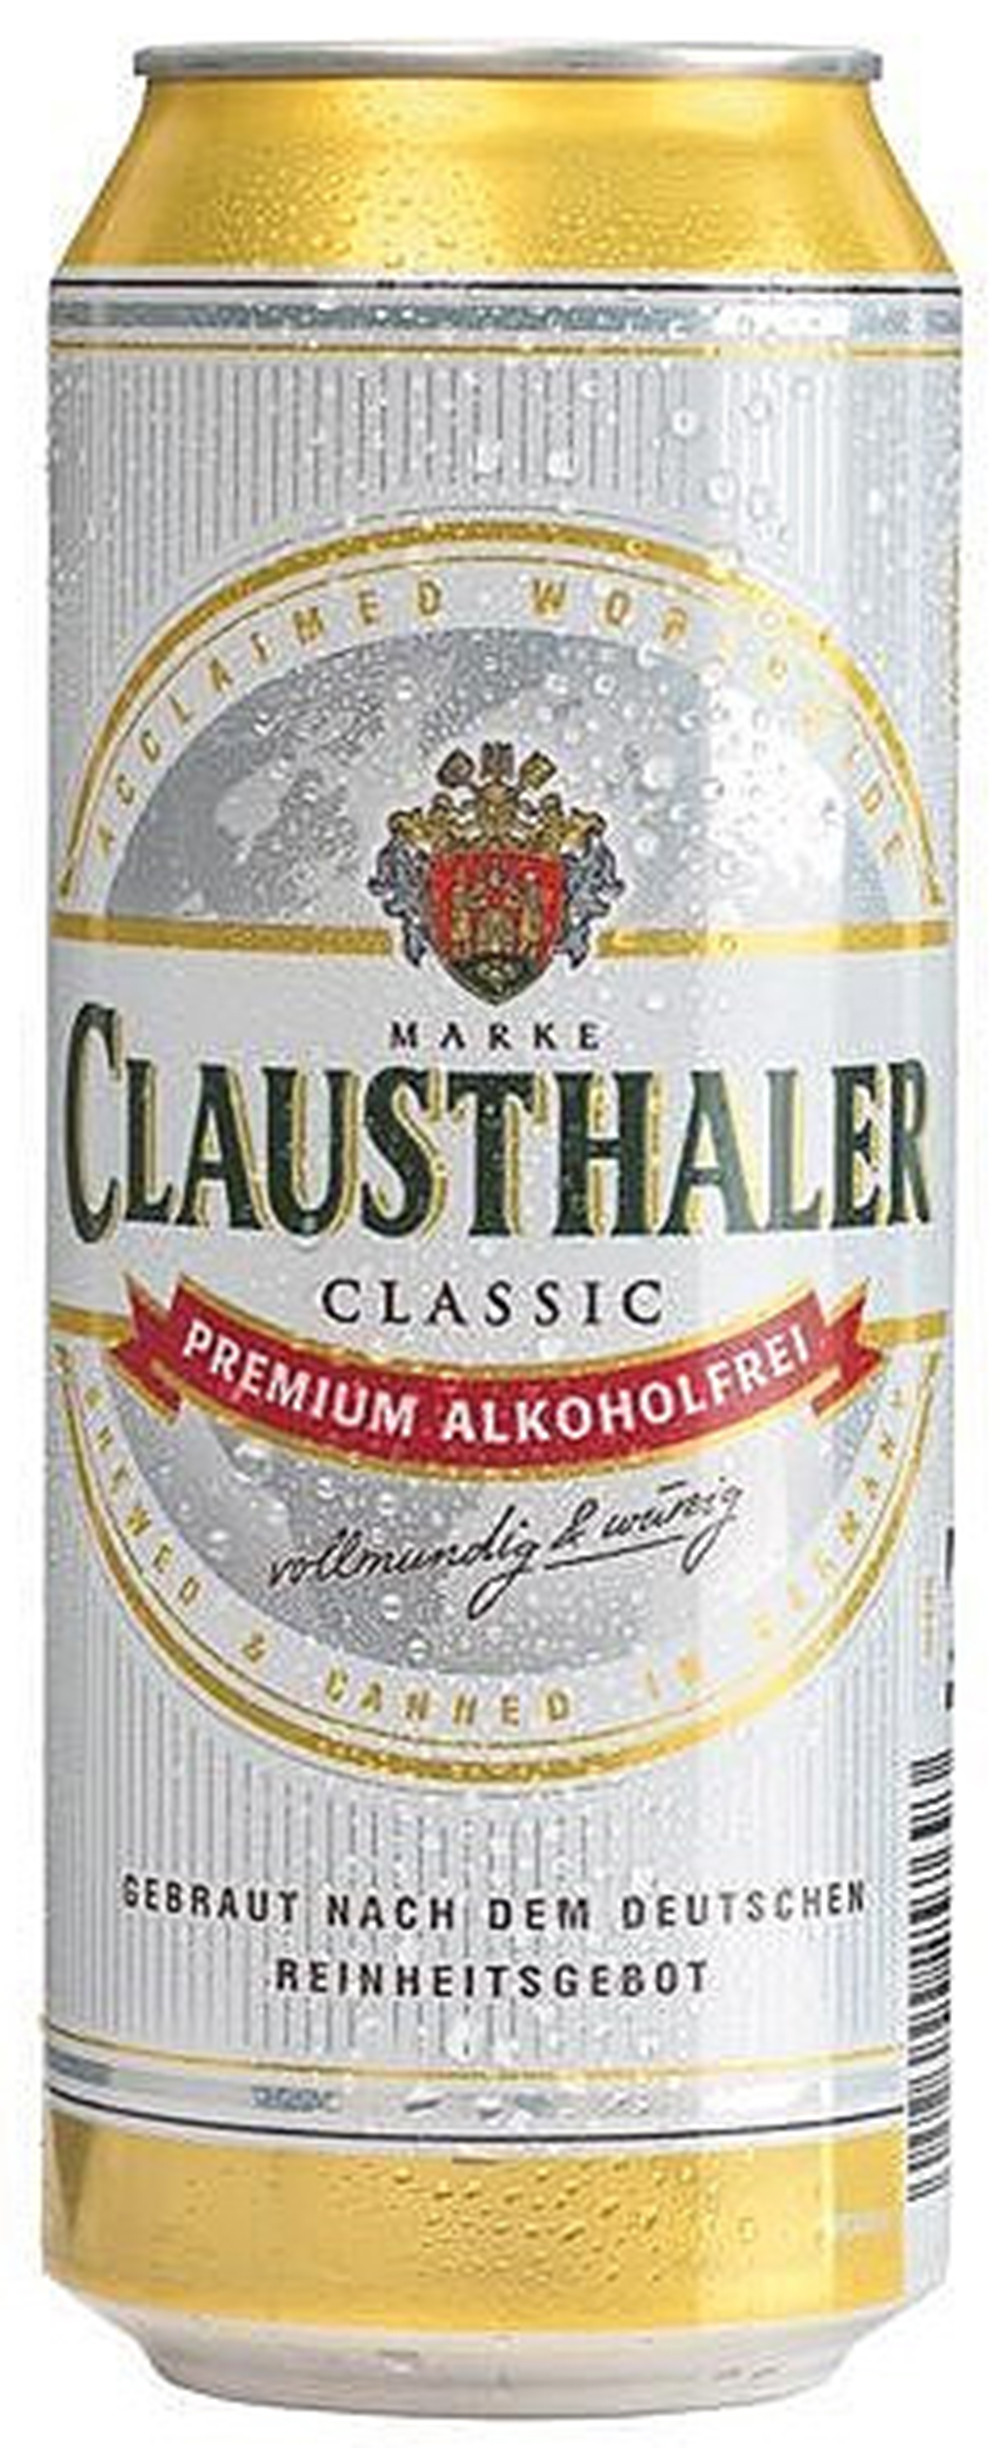 Пиво Клаусталер Премиум б а Германия ж б 0.5 л - интернет-магазин Близнецы